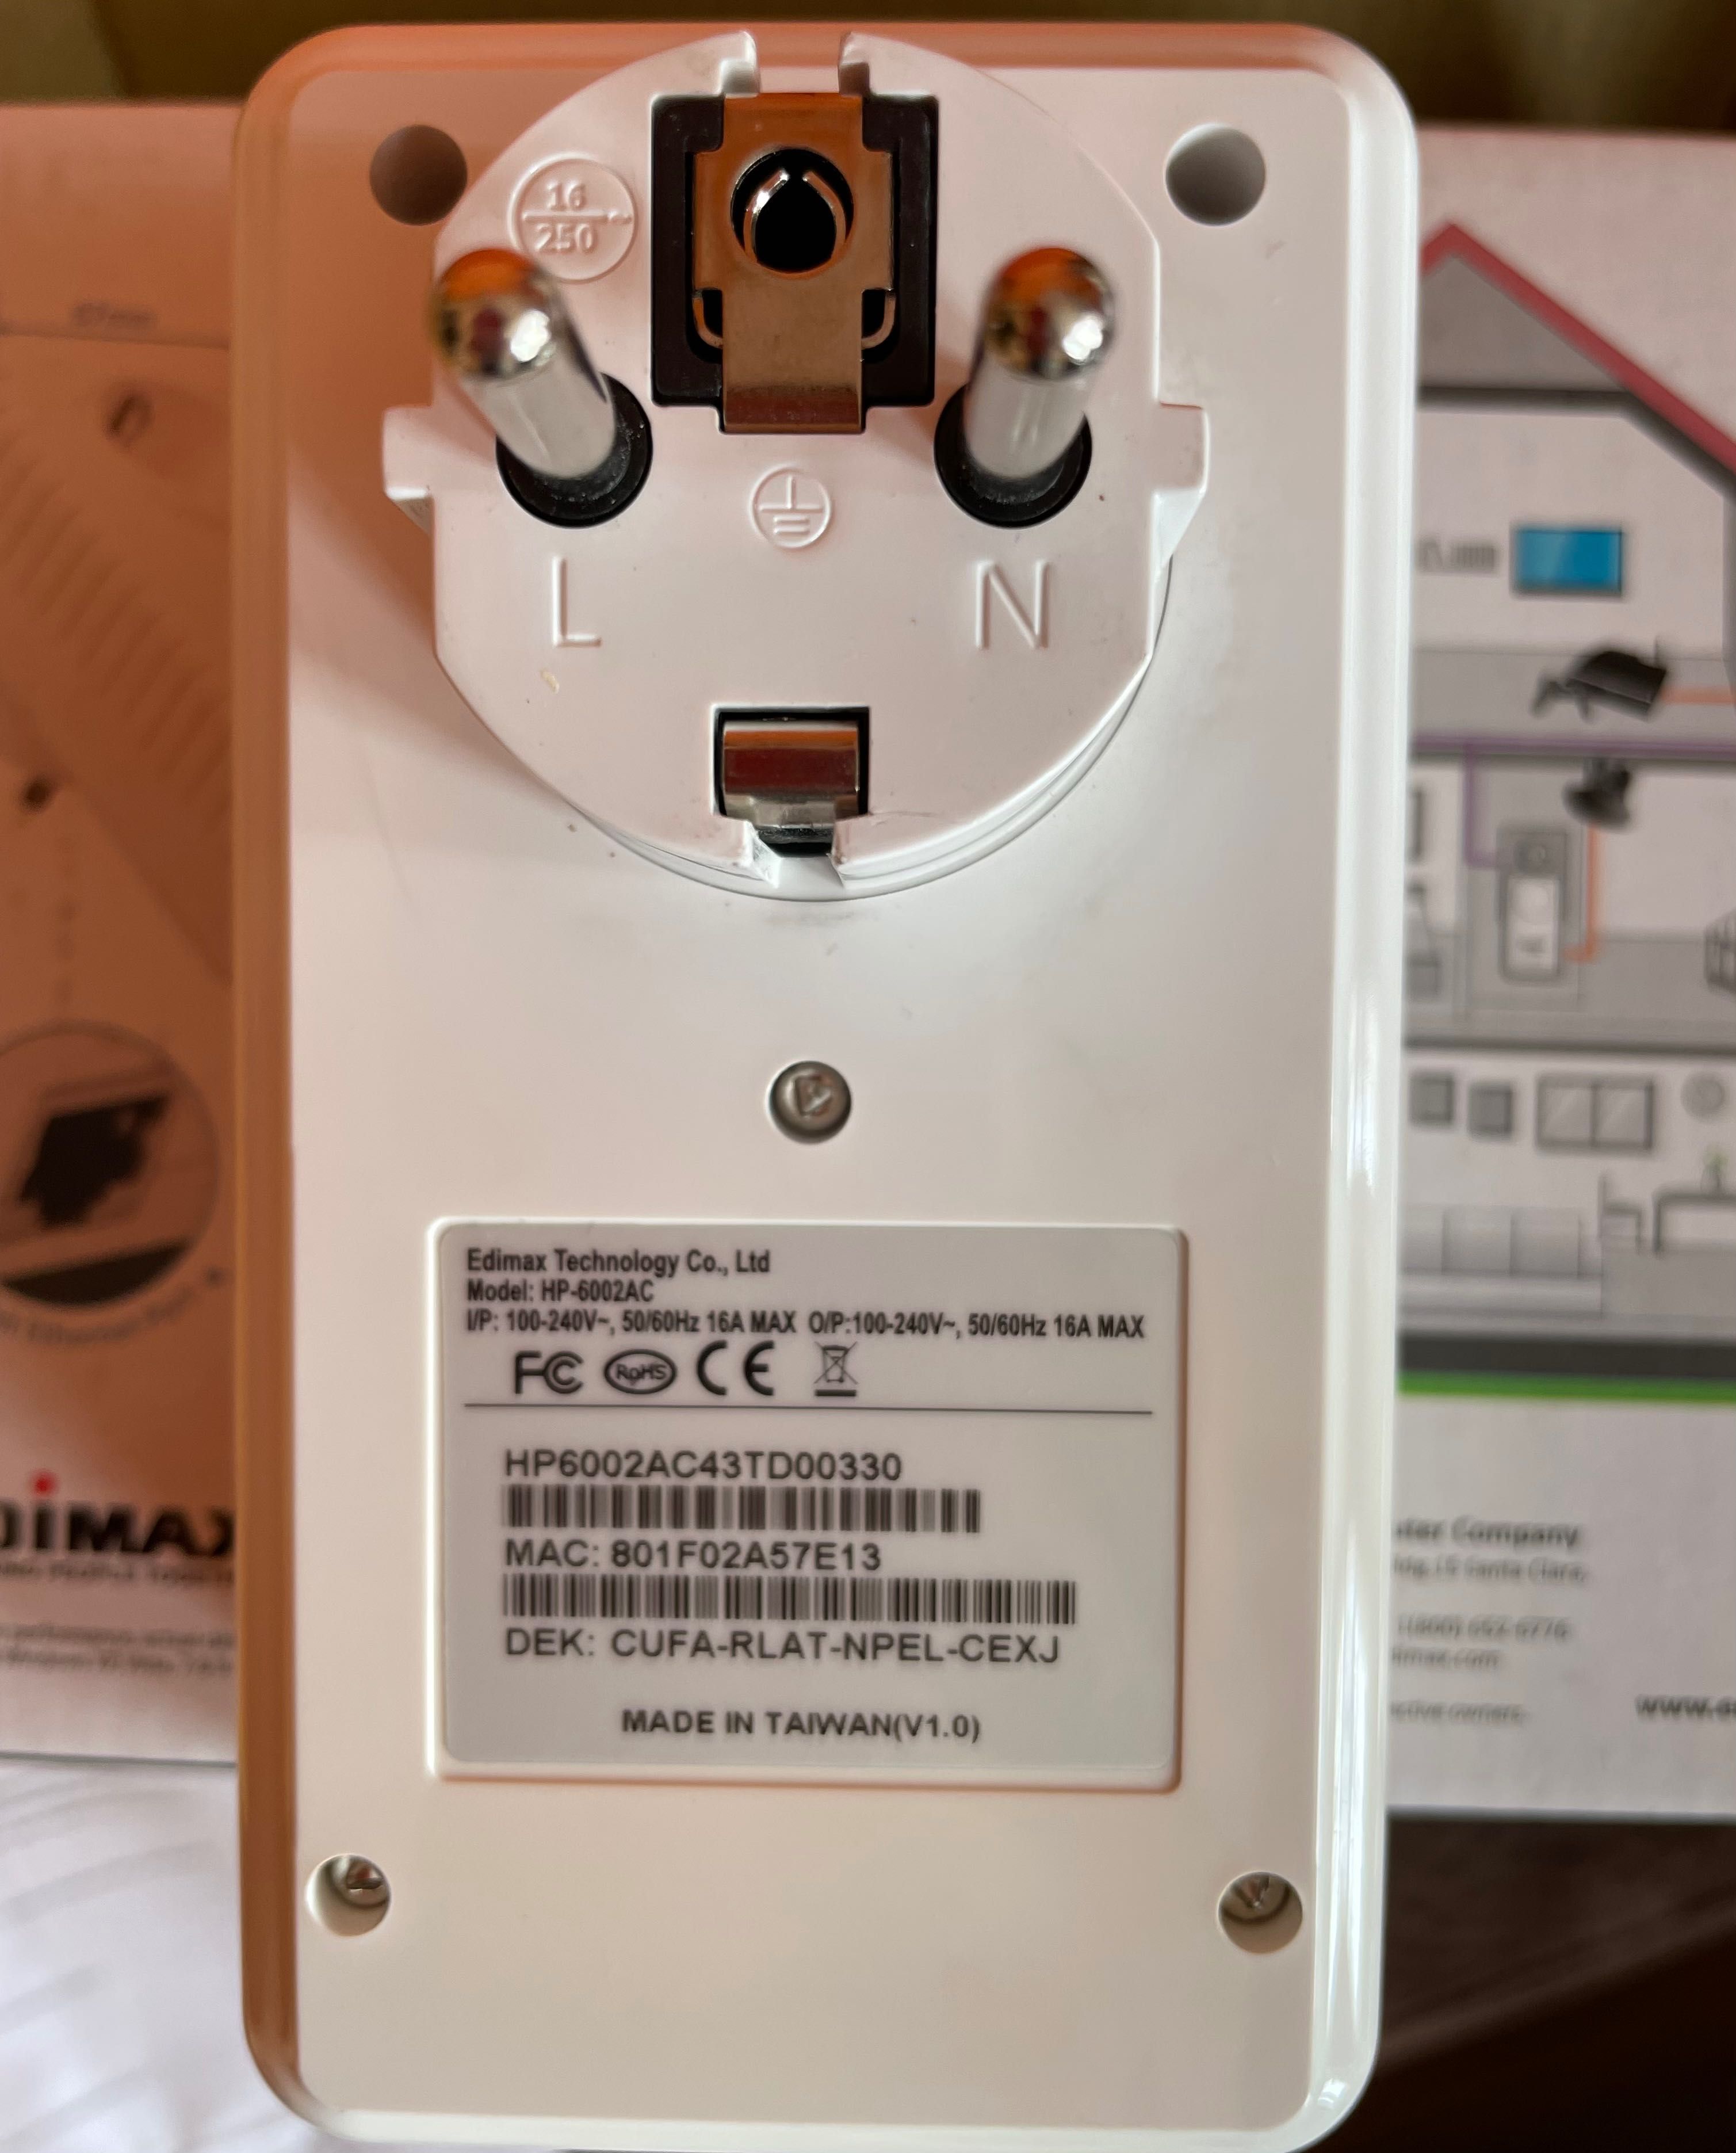 Power line adapter Edimax HP 6002 AC